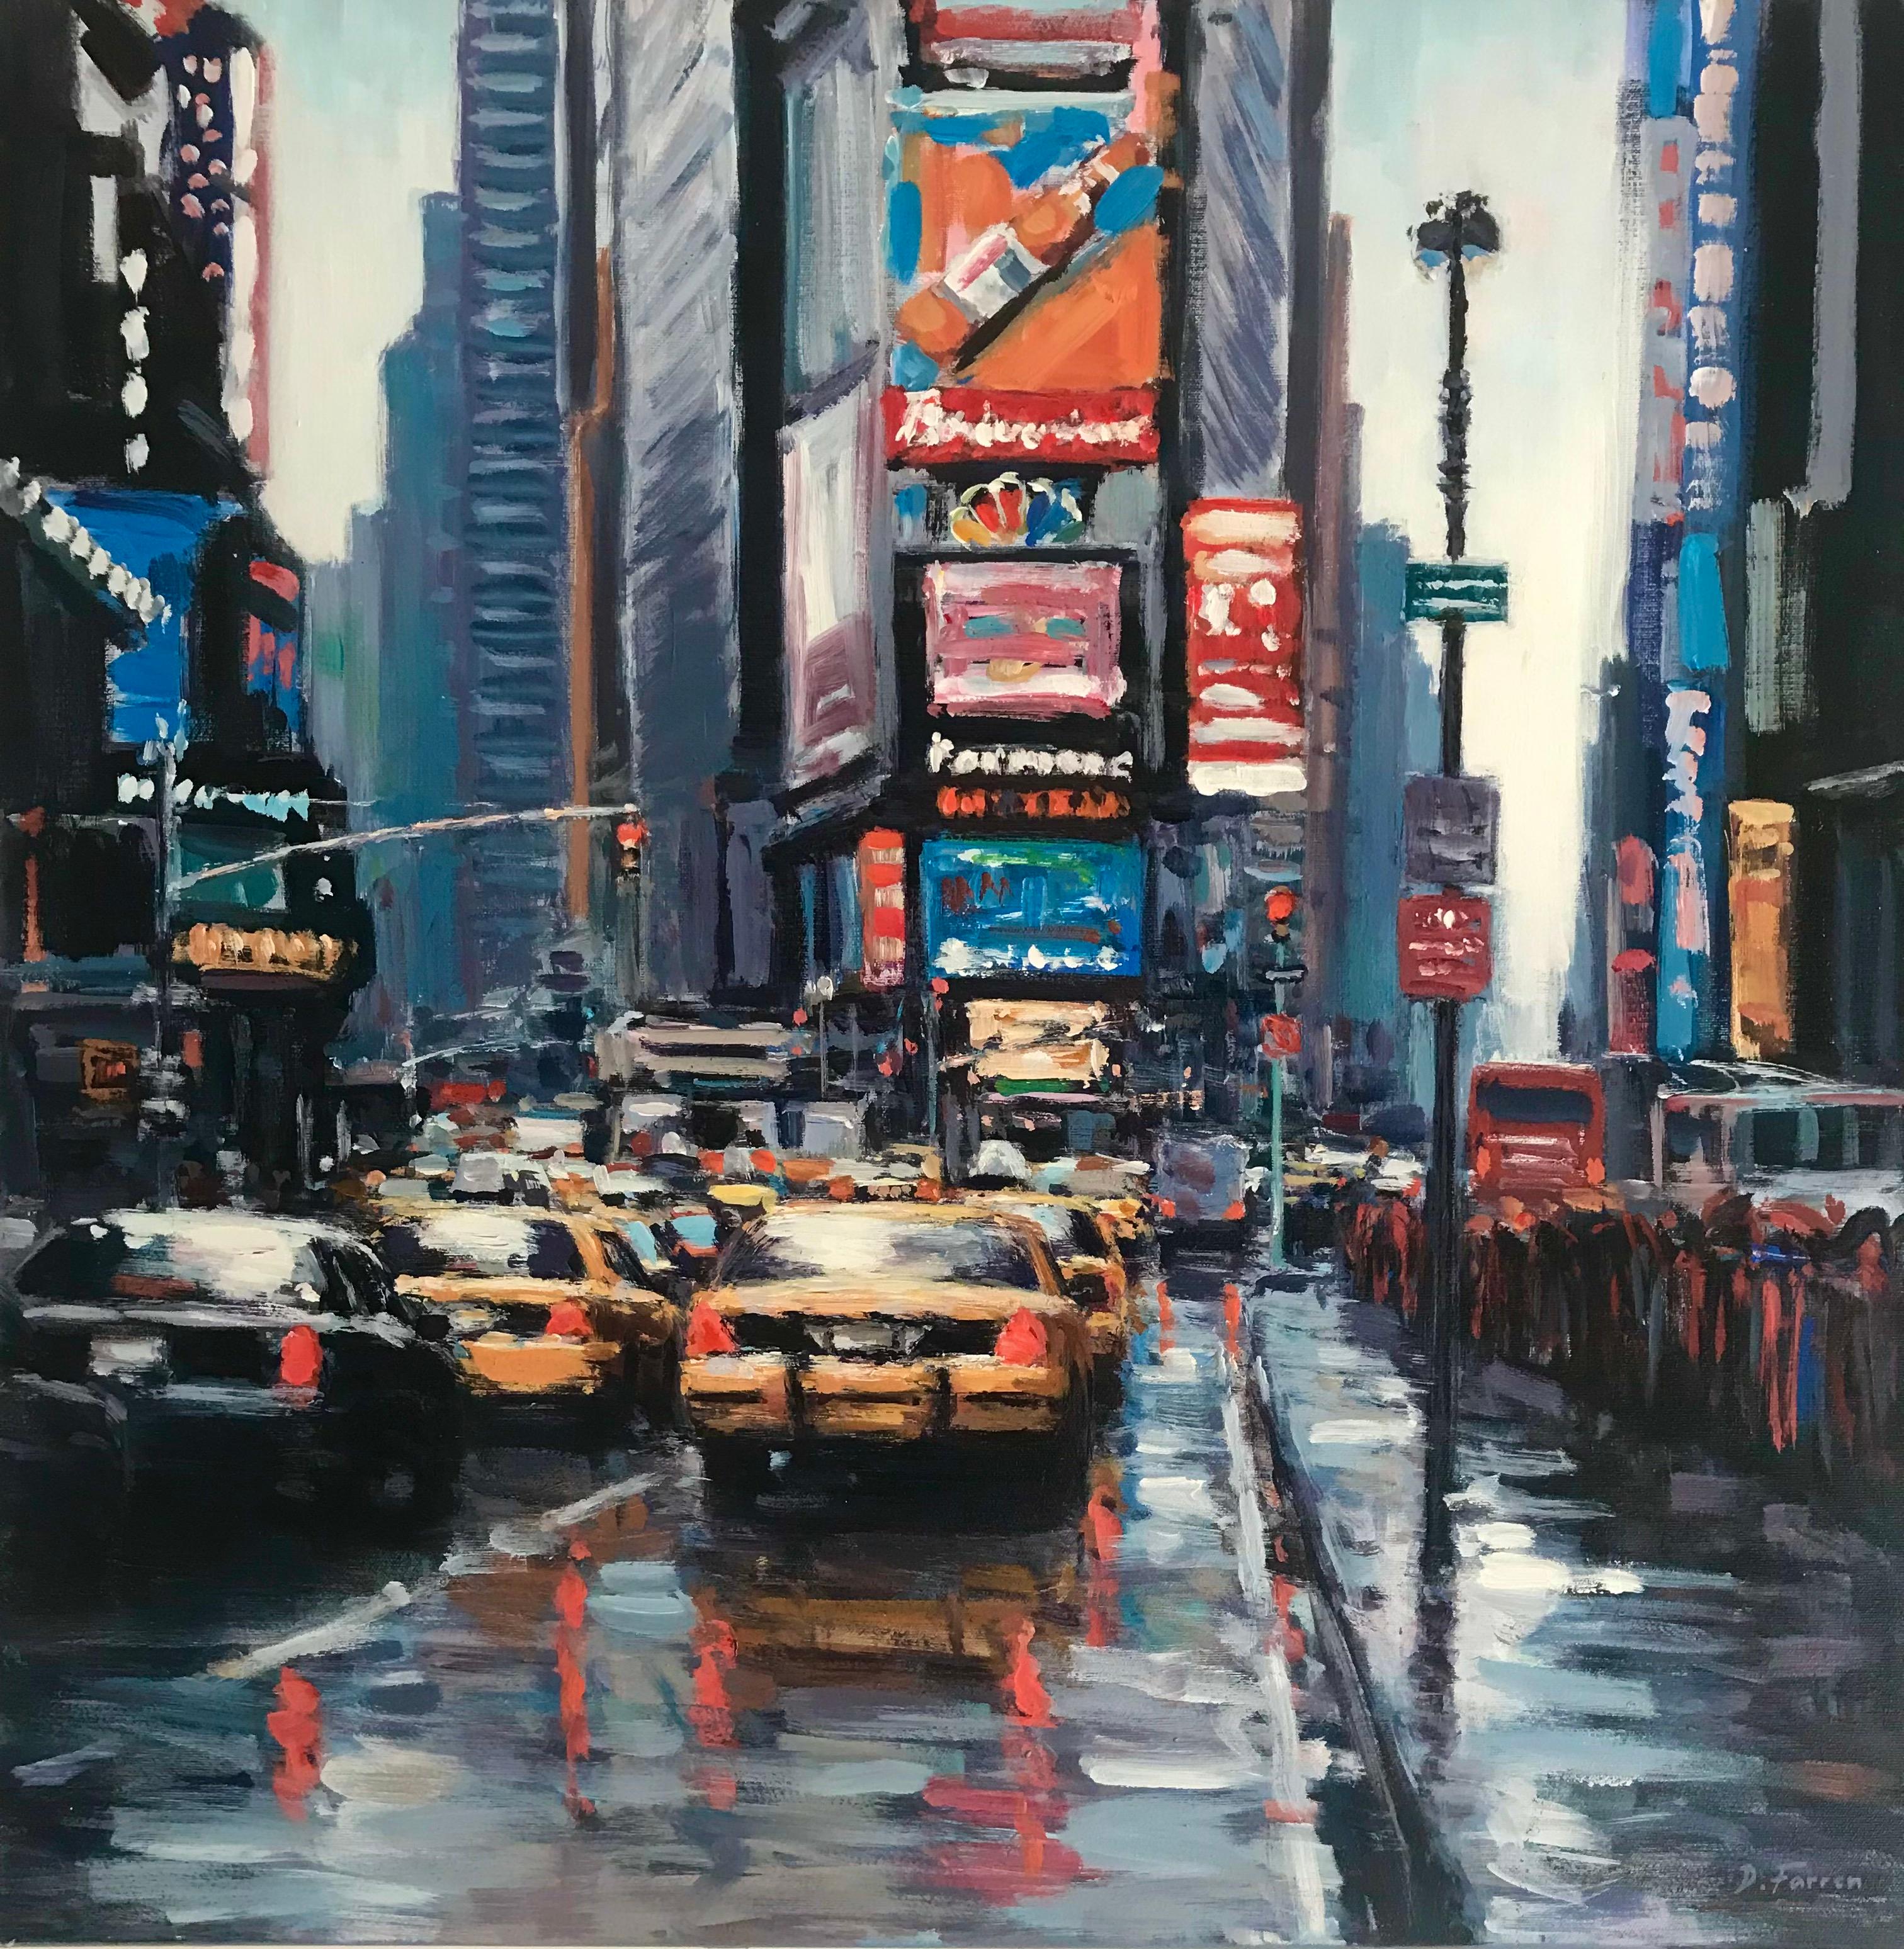 Landscape Painting David Farren - Time Square, New York, États-Unis  Paysage urbain paysager, peinture impressionniste moderne